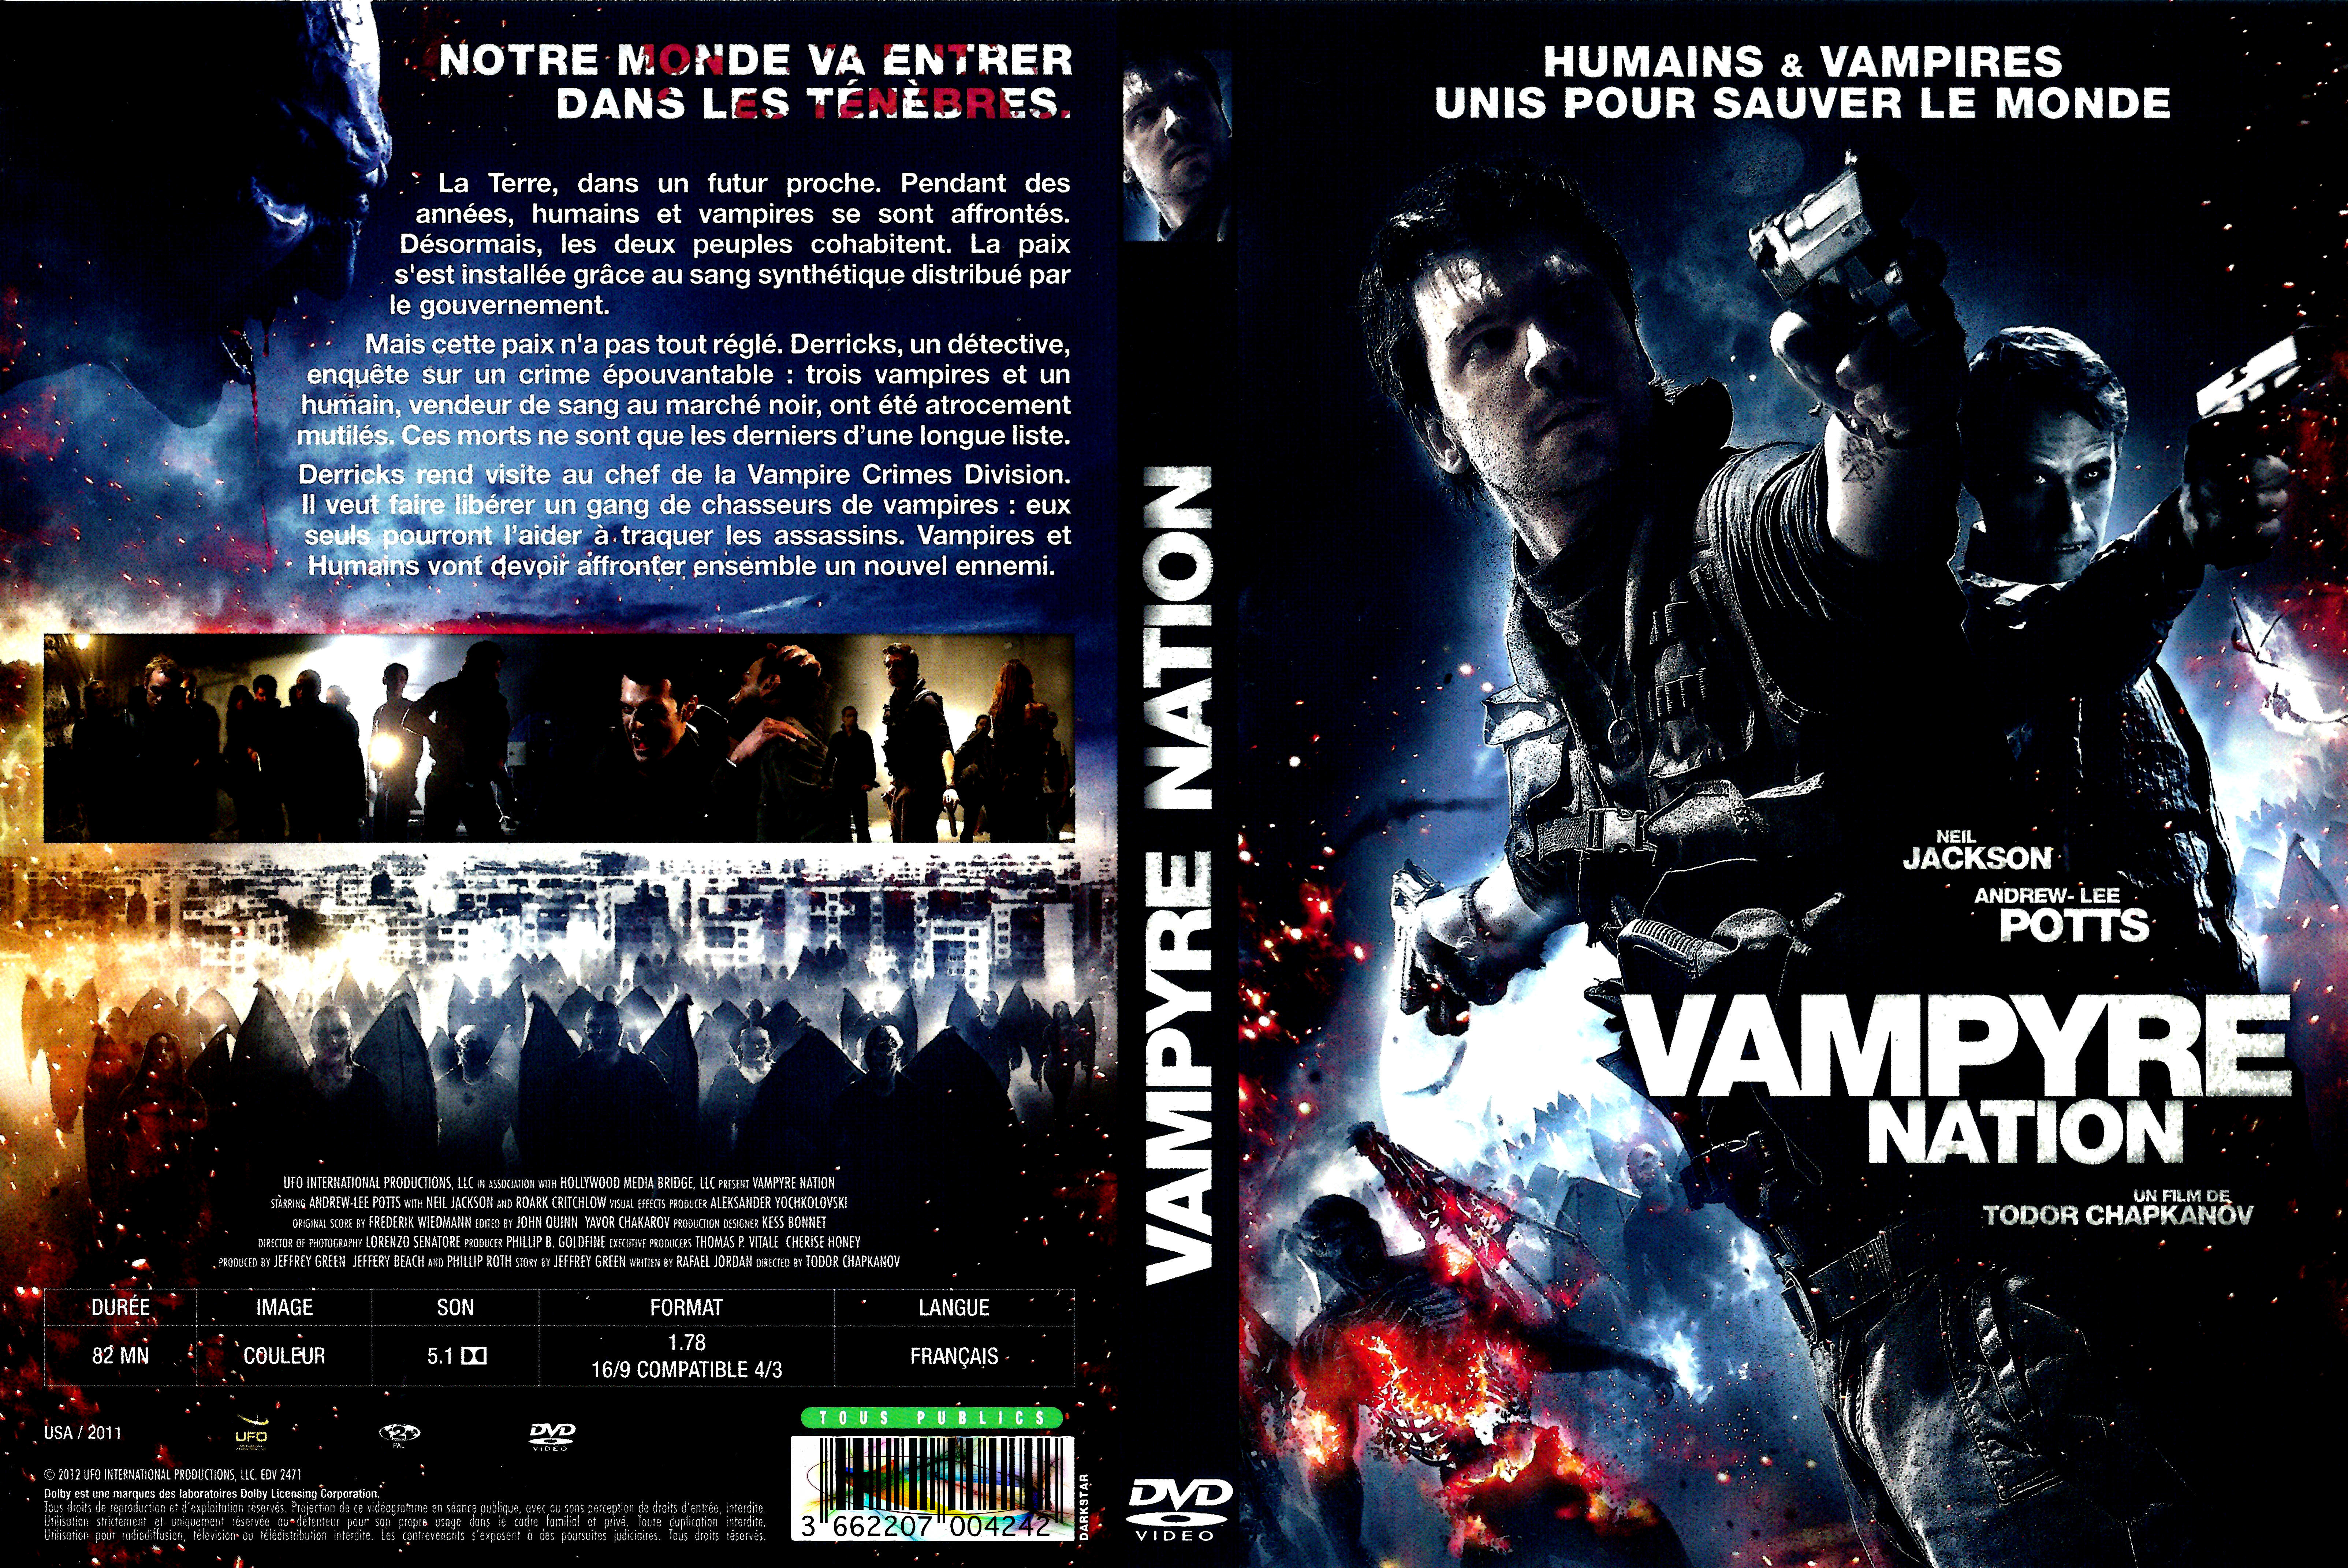 Jaquette DVD Vampyre nation